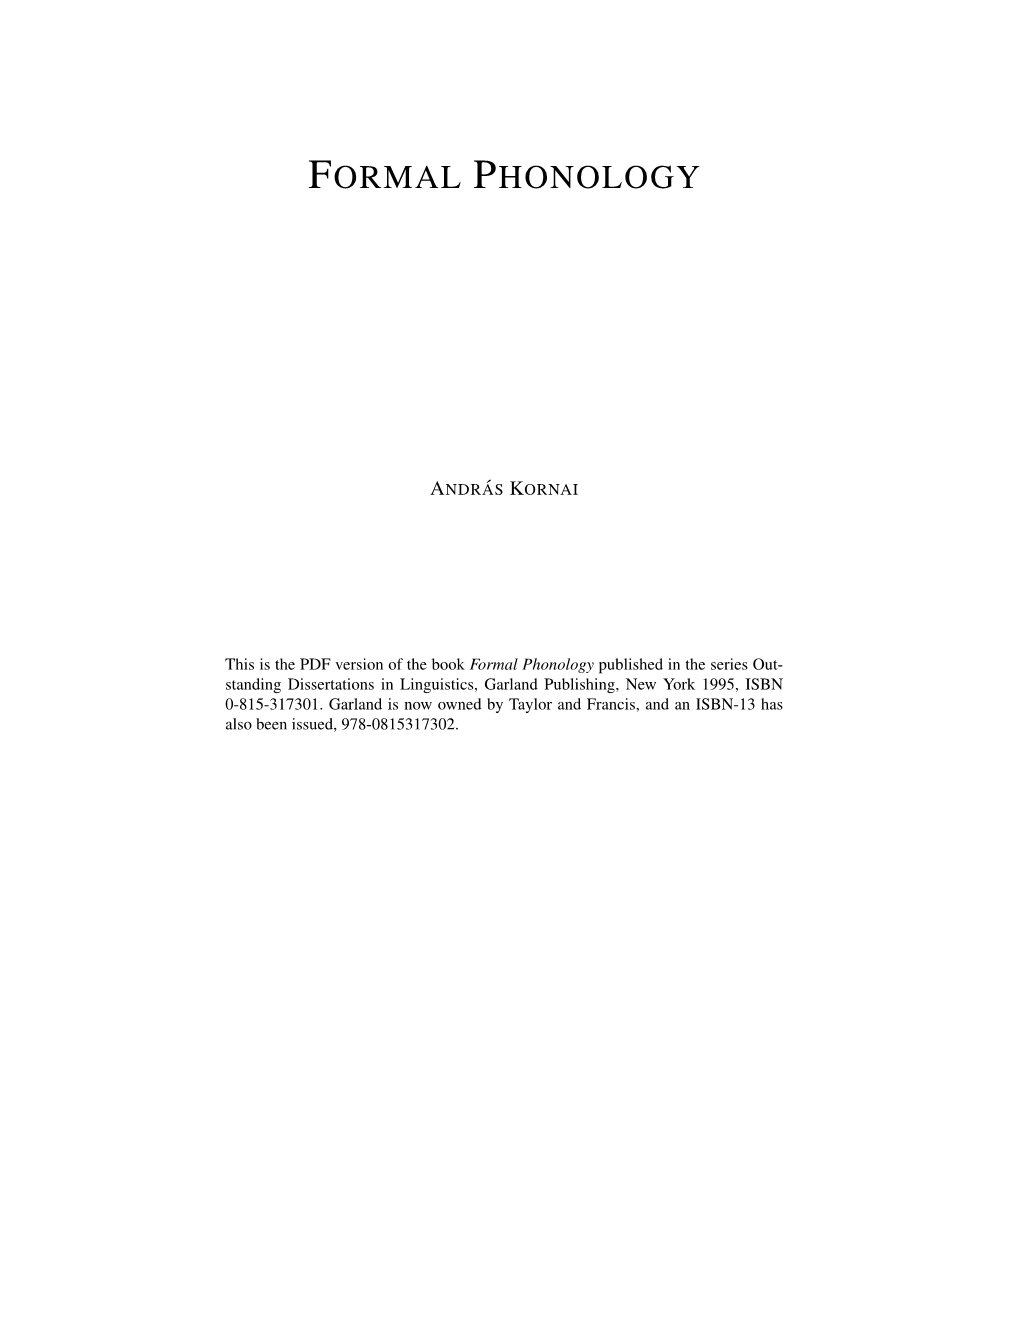 Formal Phonology